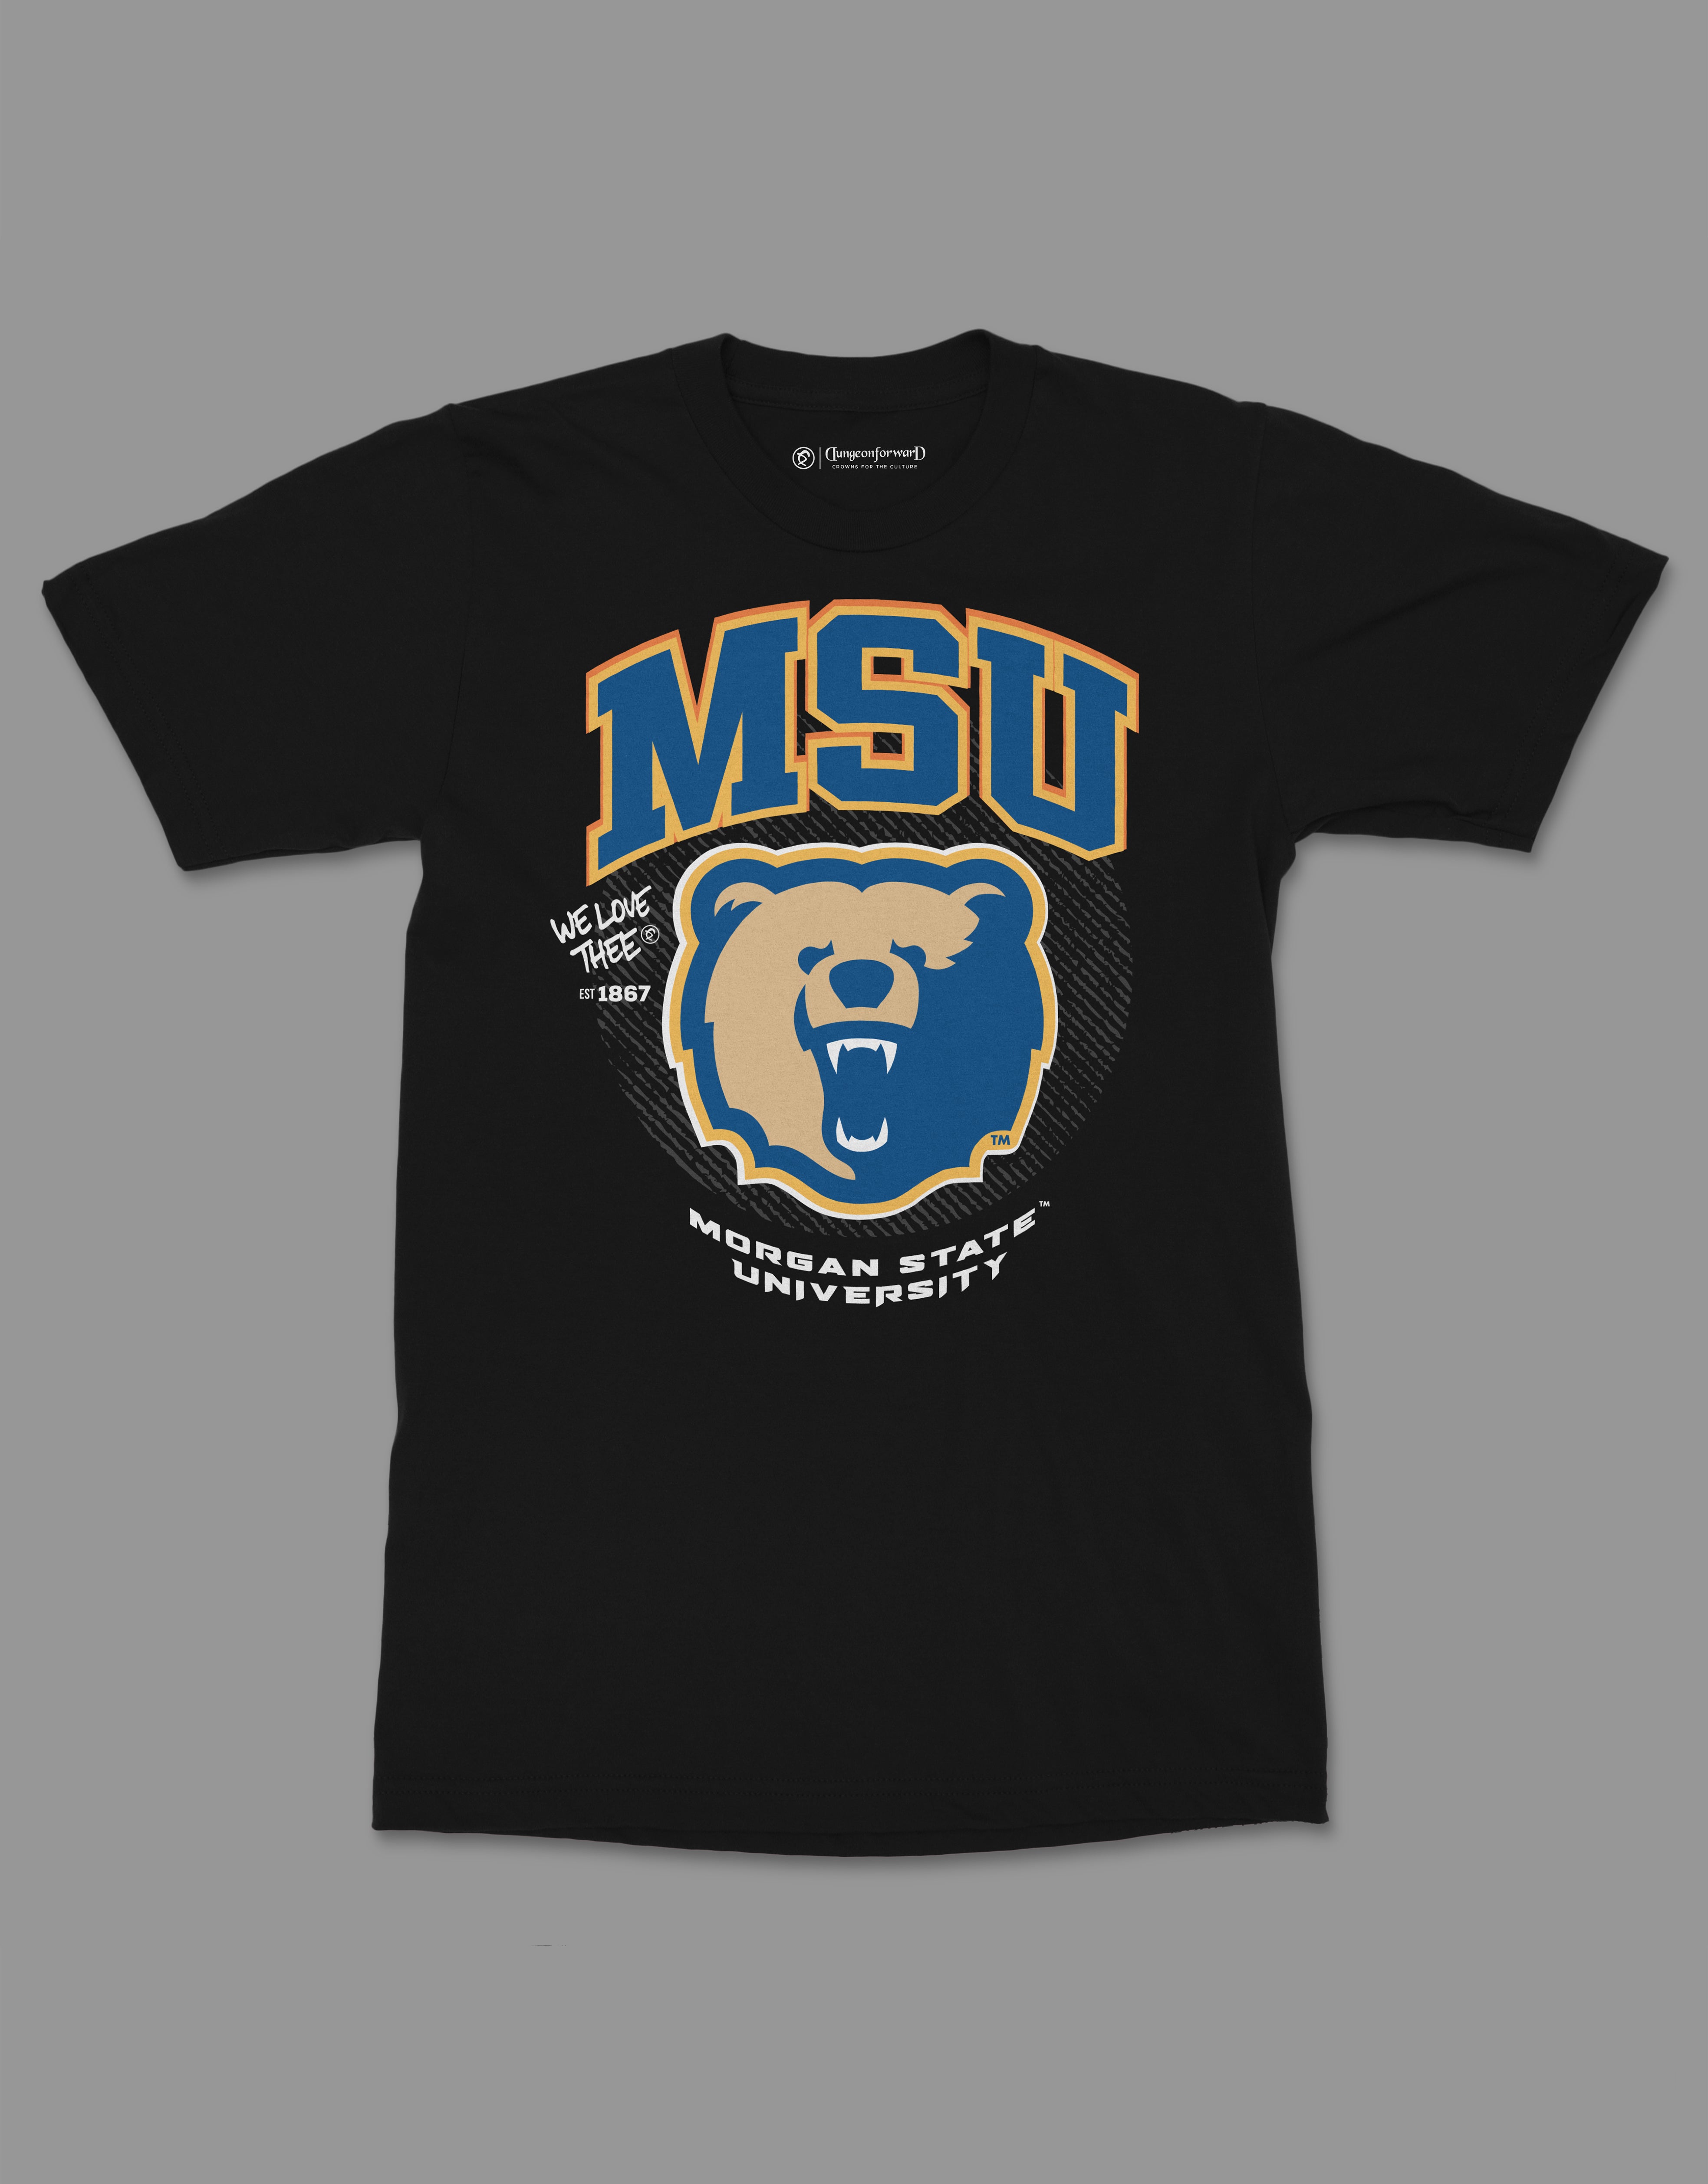 The Yard Essentials - Morgan State University - MSU Tshirt